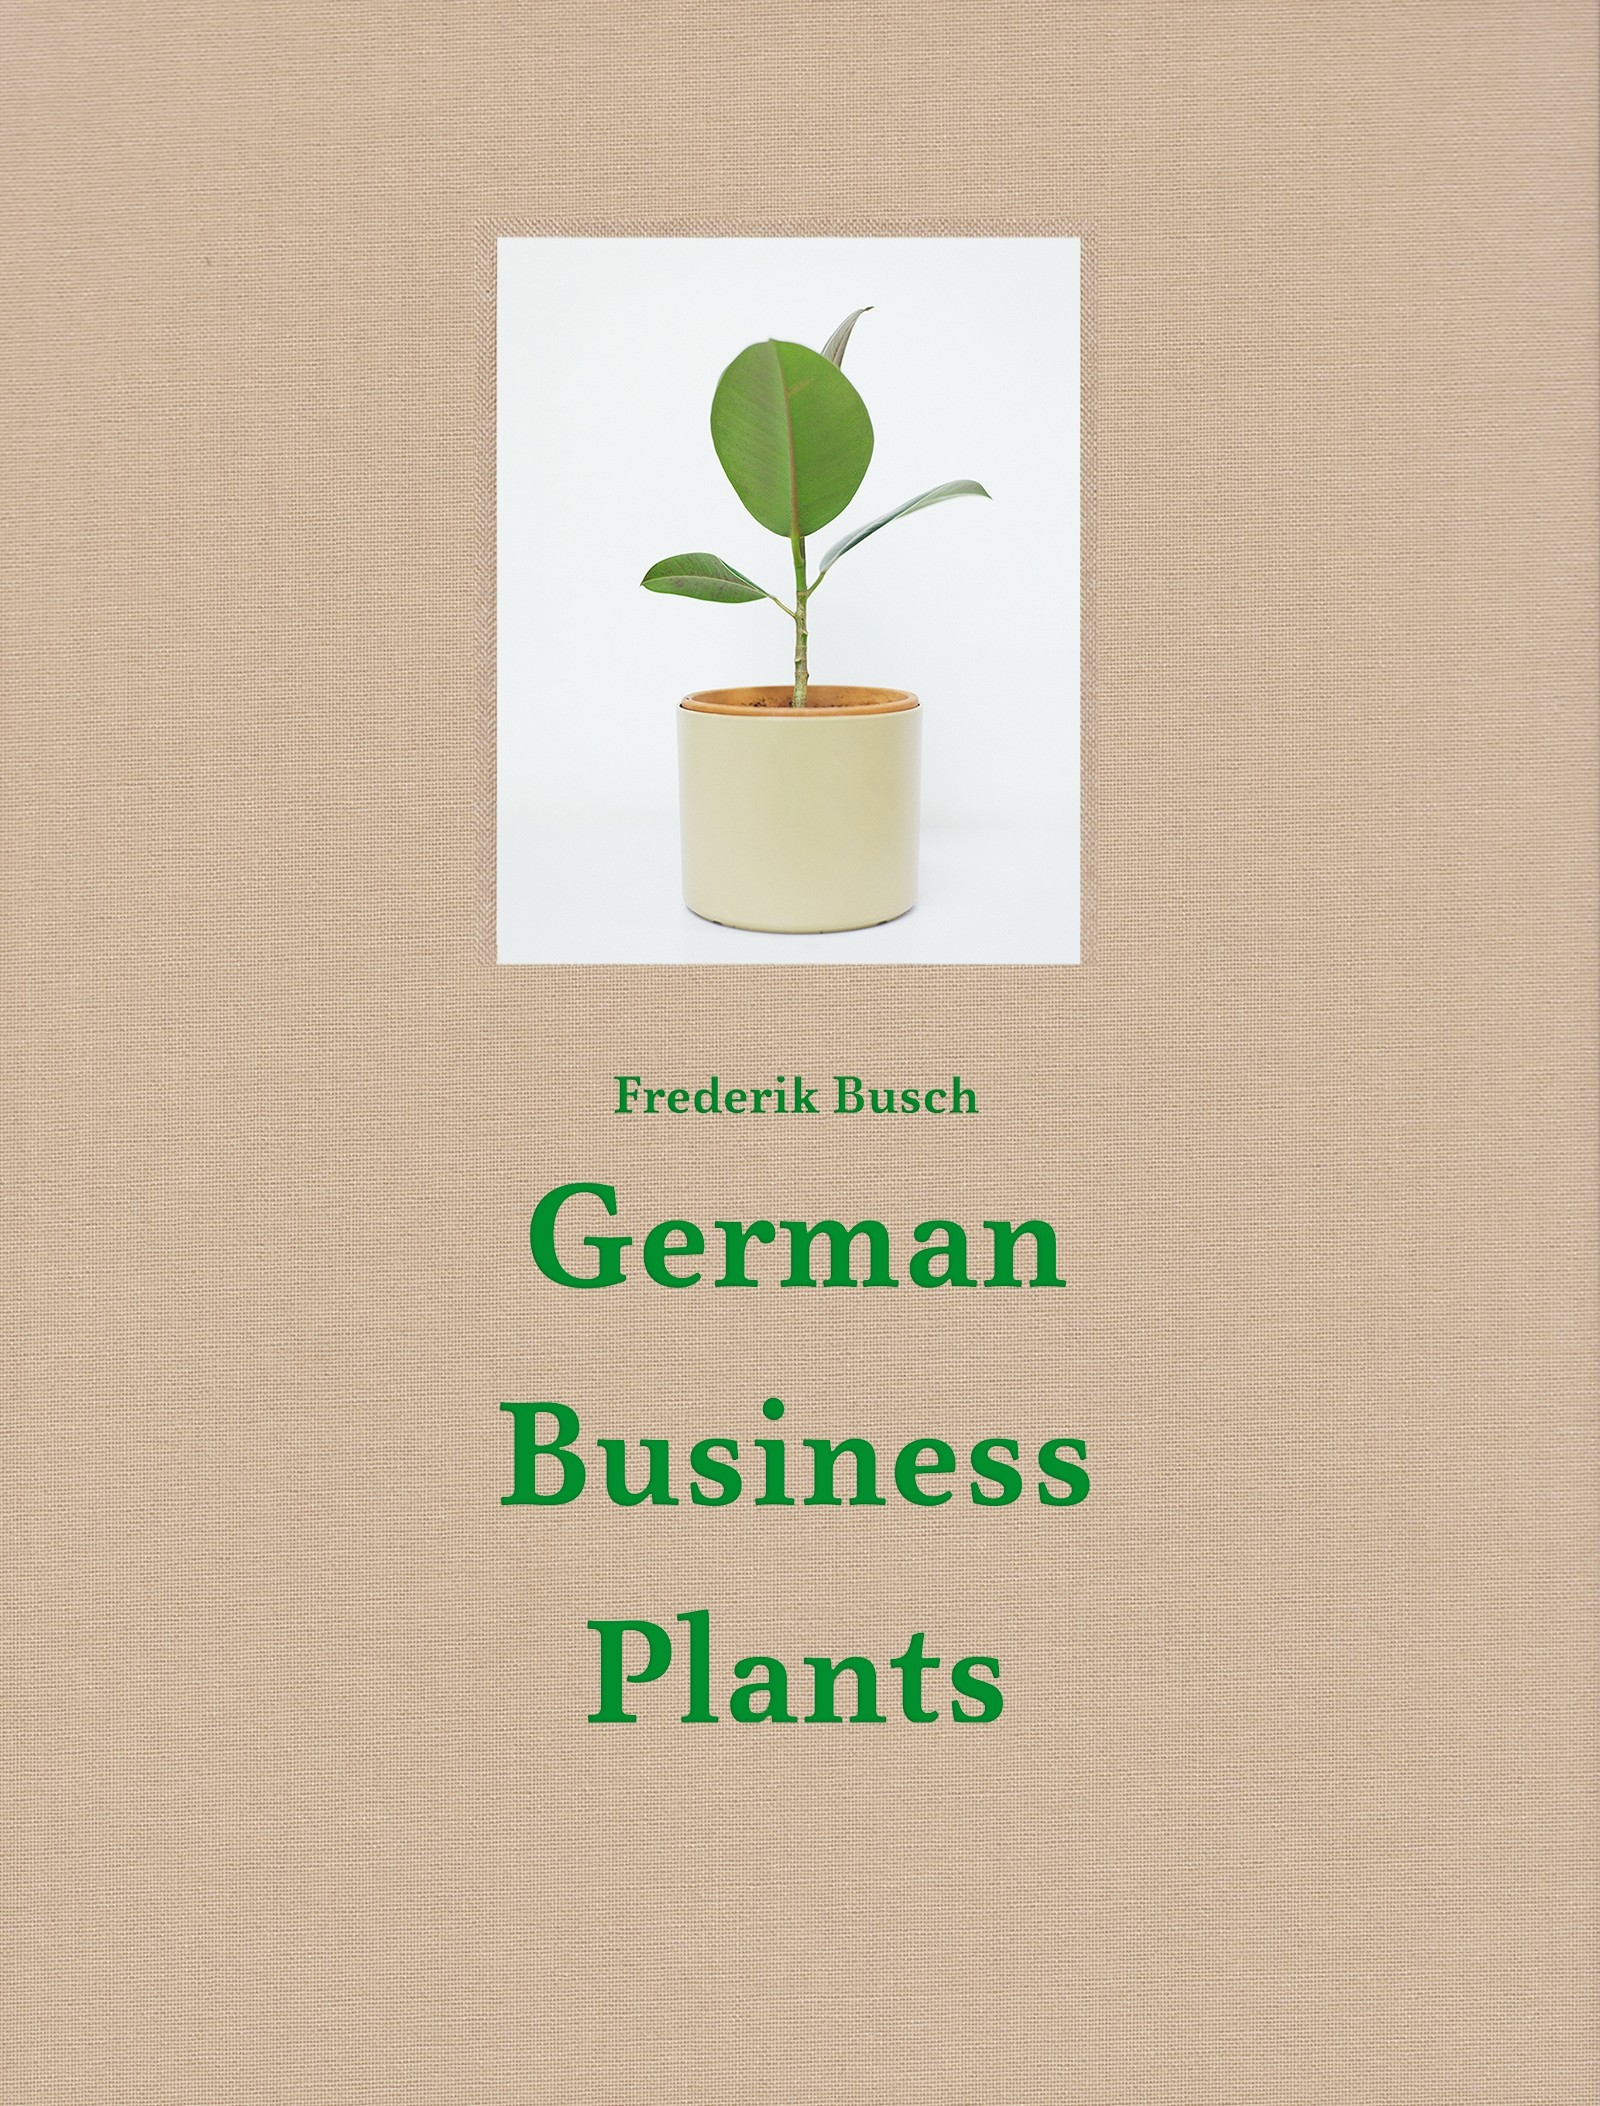 Frederik Busch COLLECTOR'S EDITION: German Business Plants 